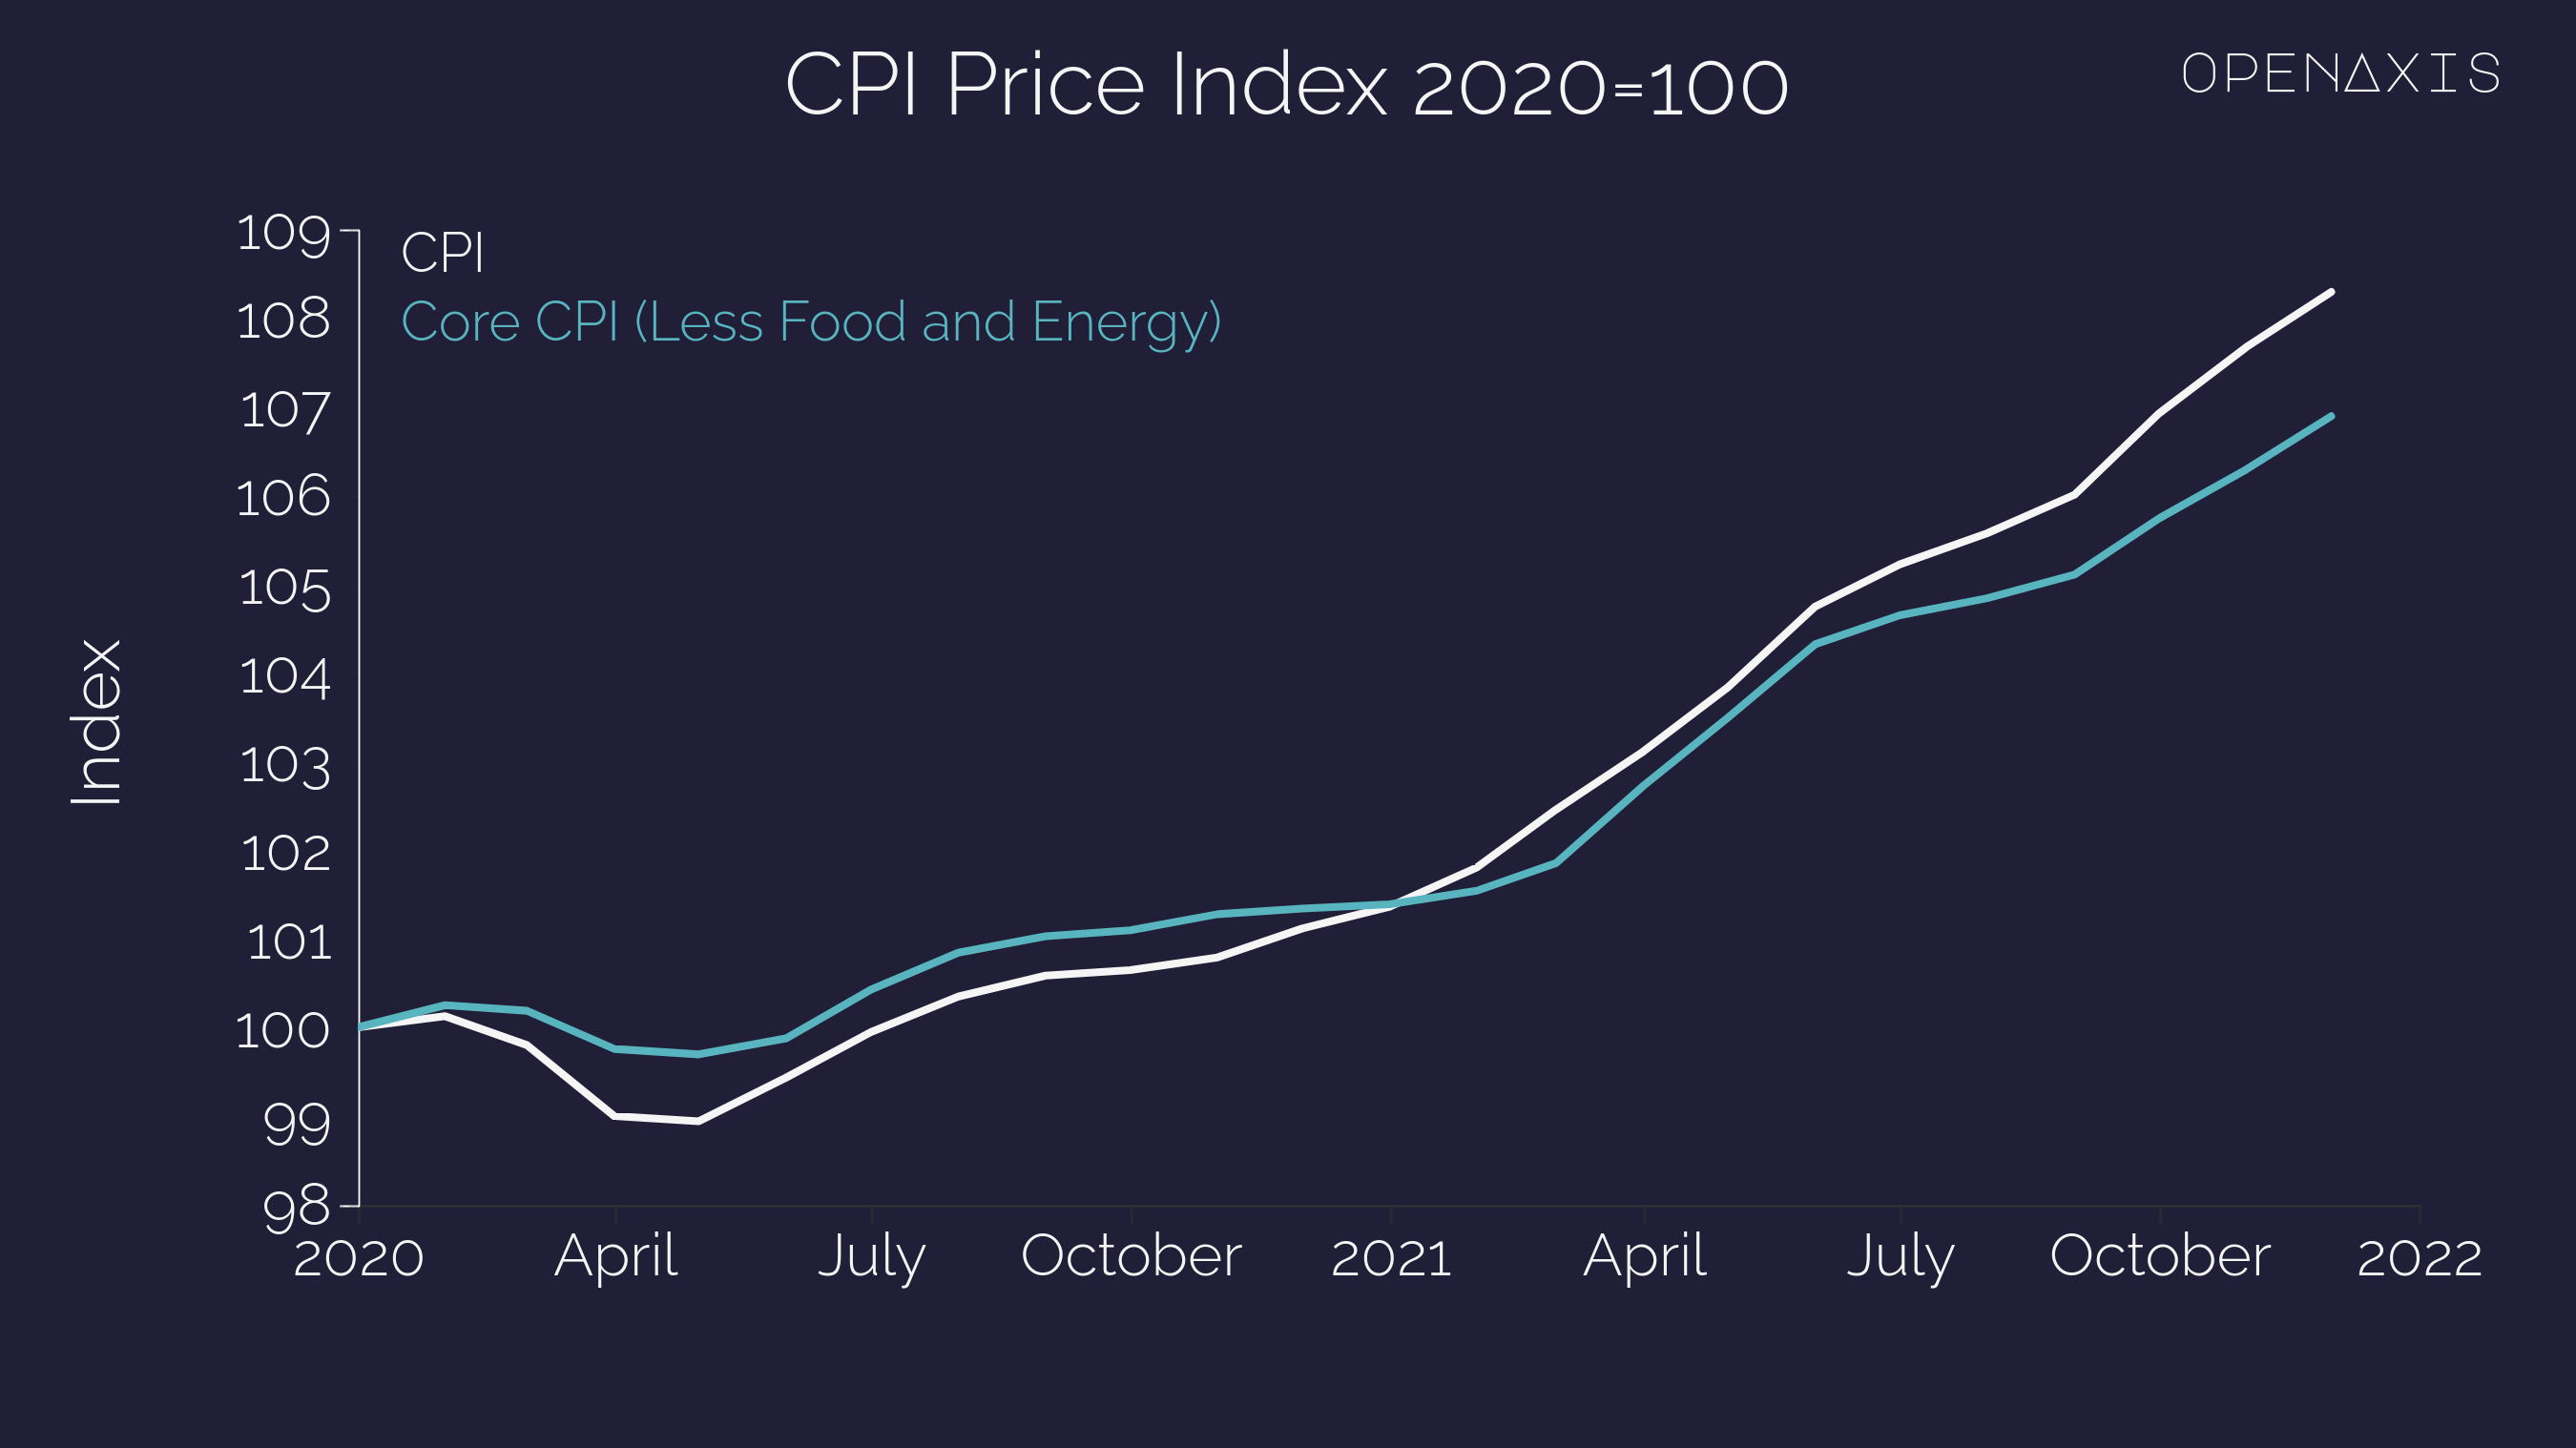 "CPI Price Index 2020=100" on OpenAxis